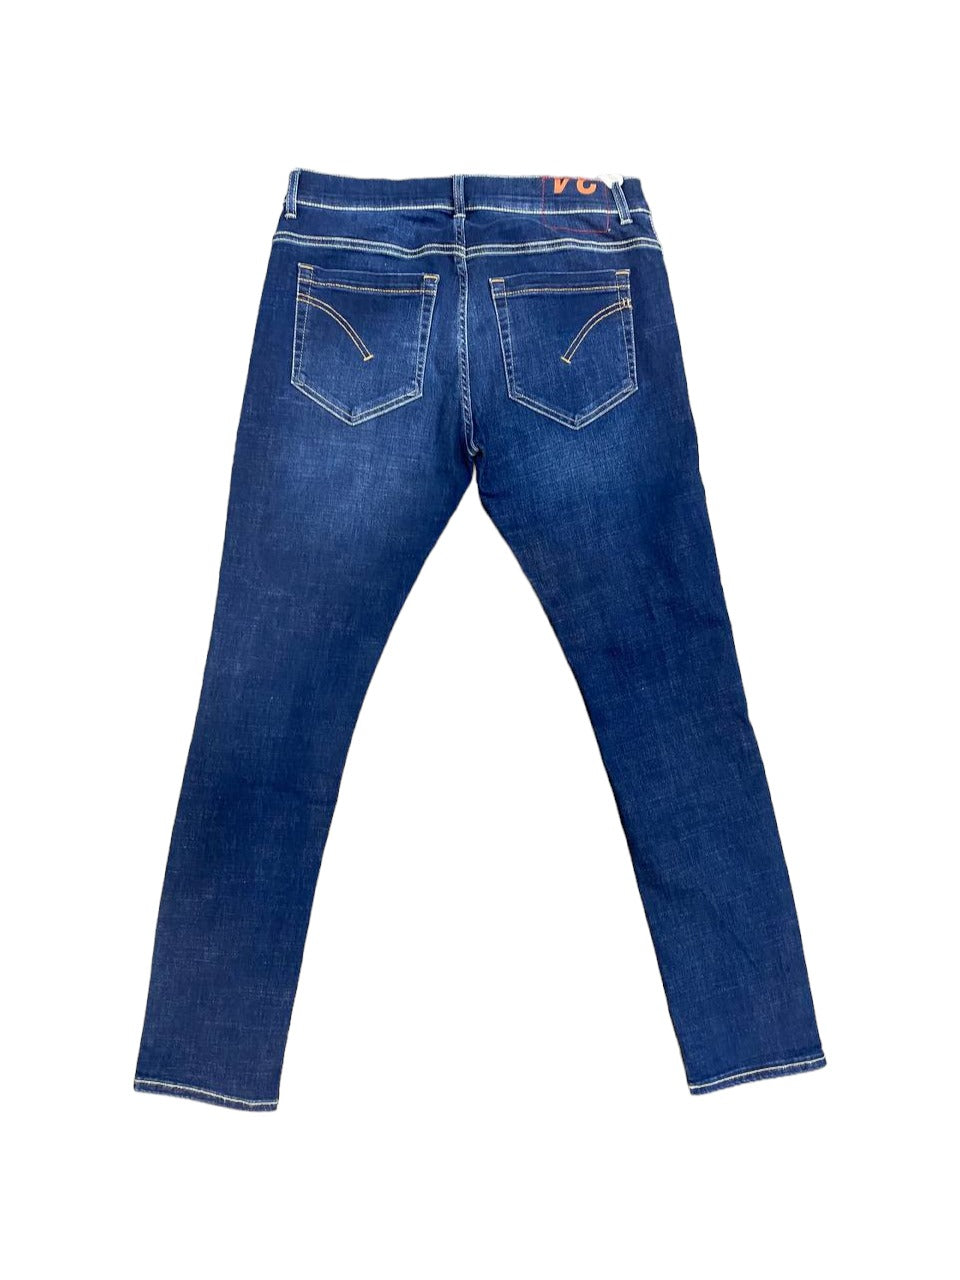 Dondup Men's Jeans